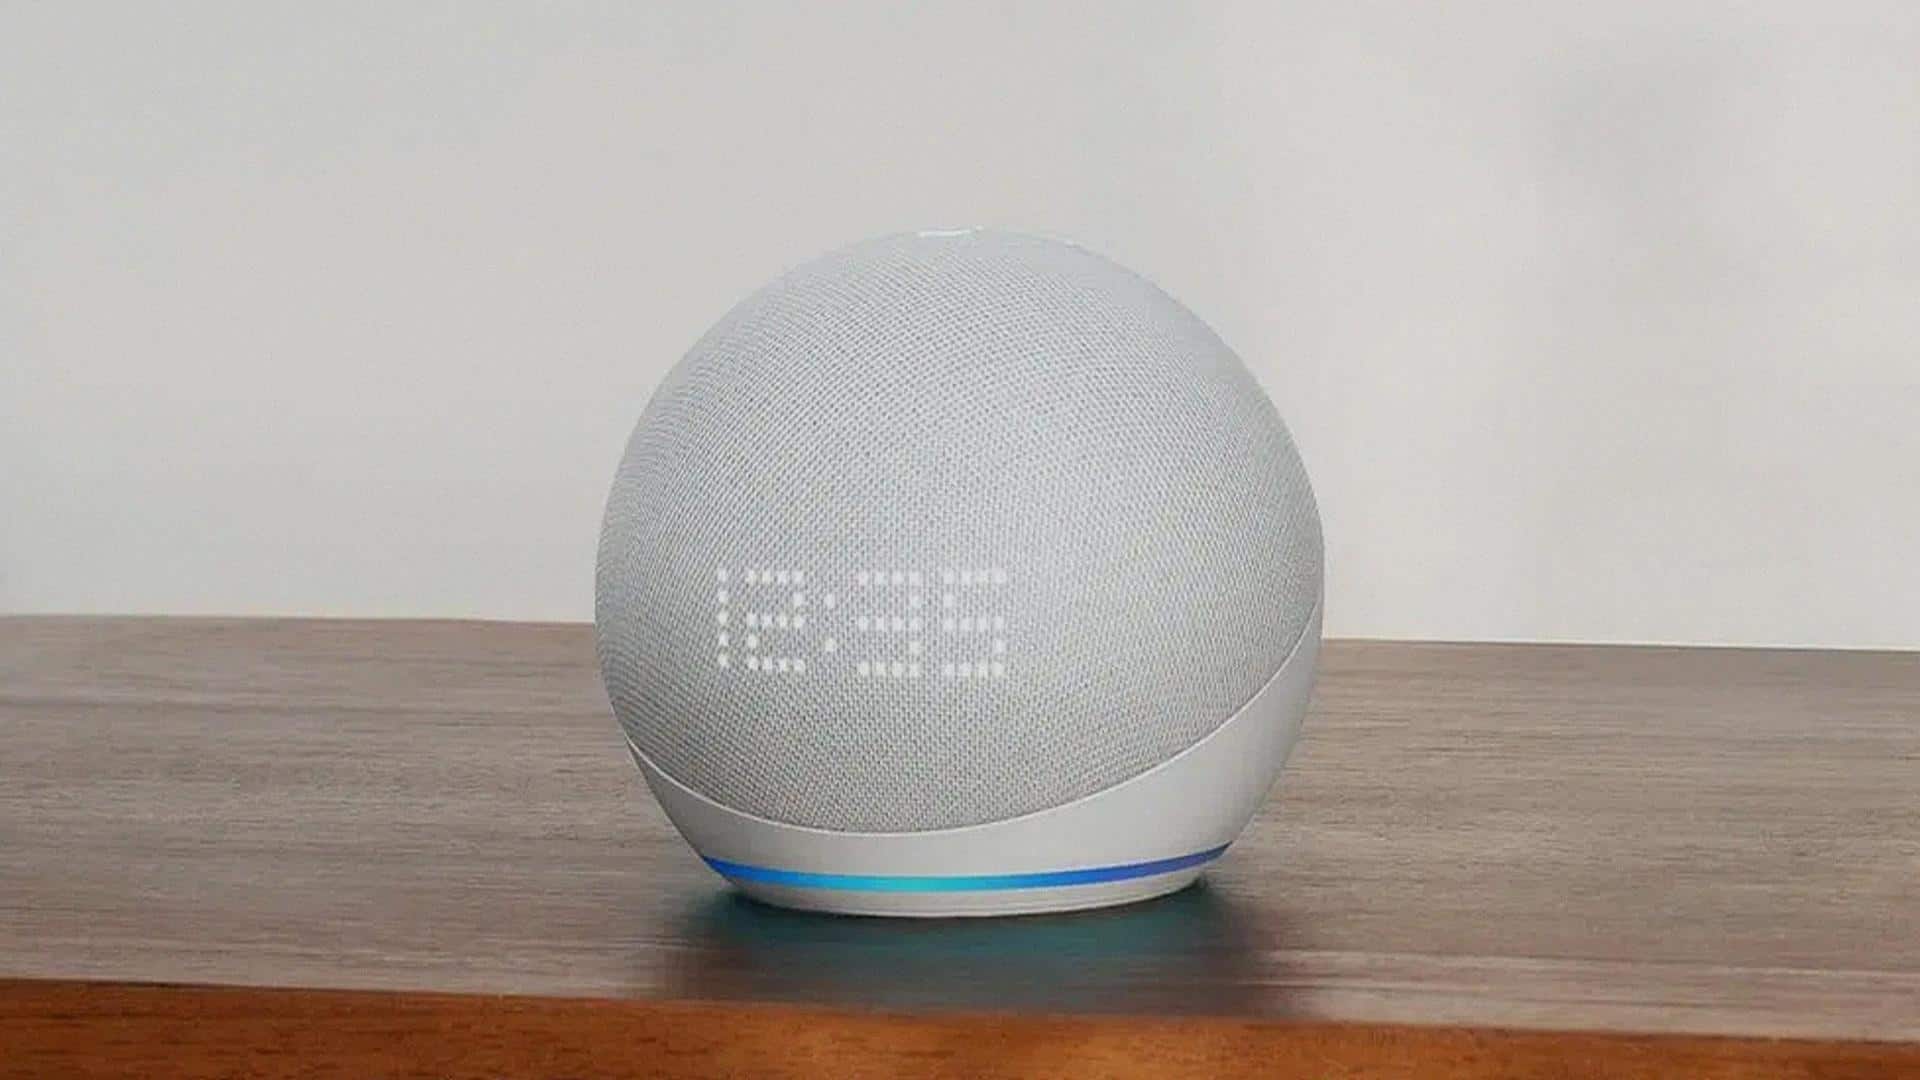 Amazon's new Echo smart speaker can measure your room's temperature